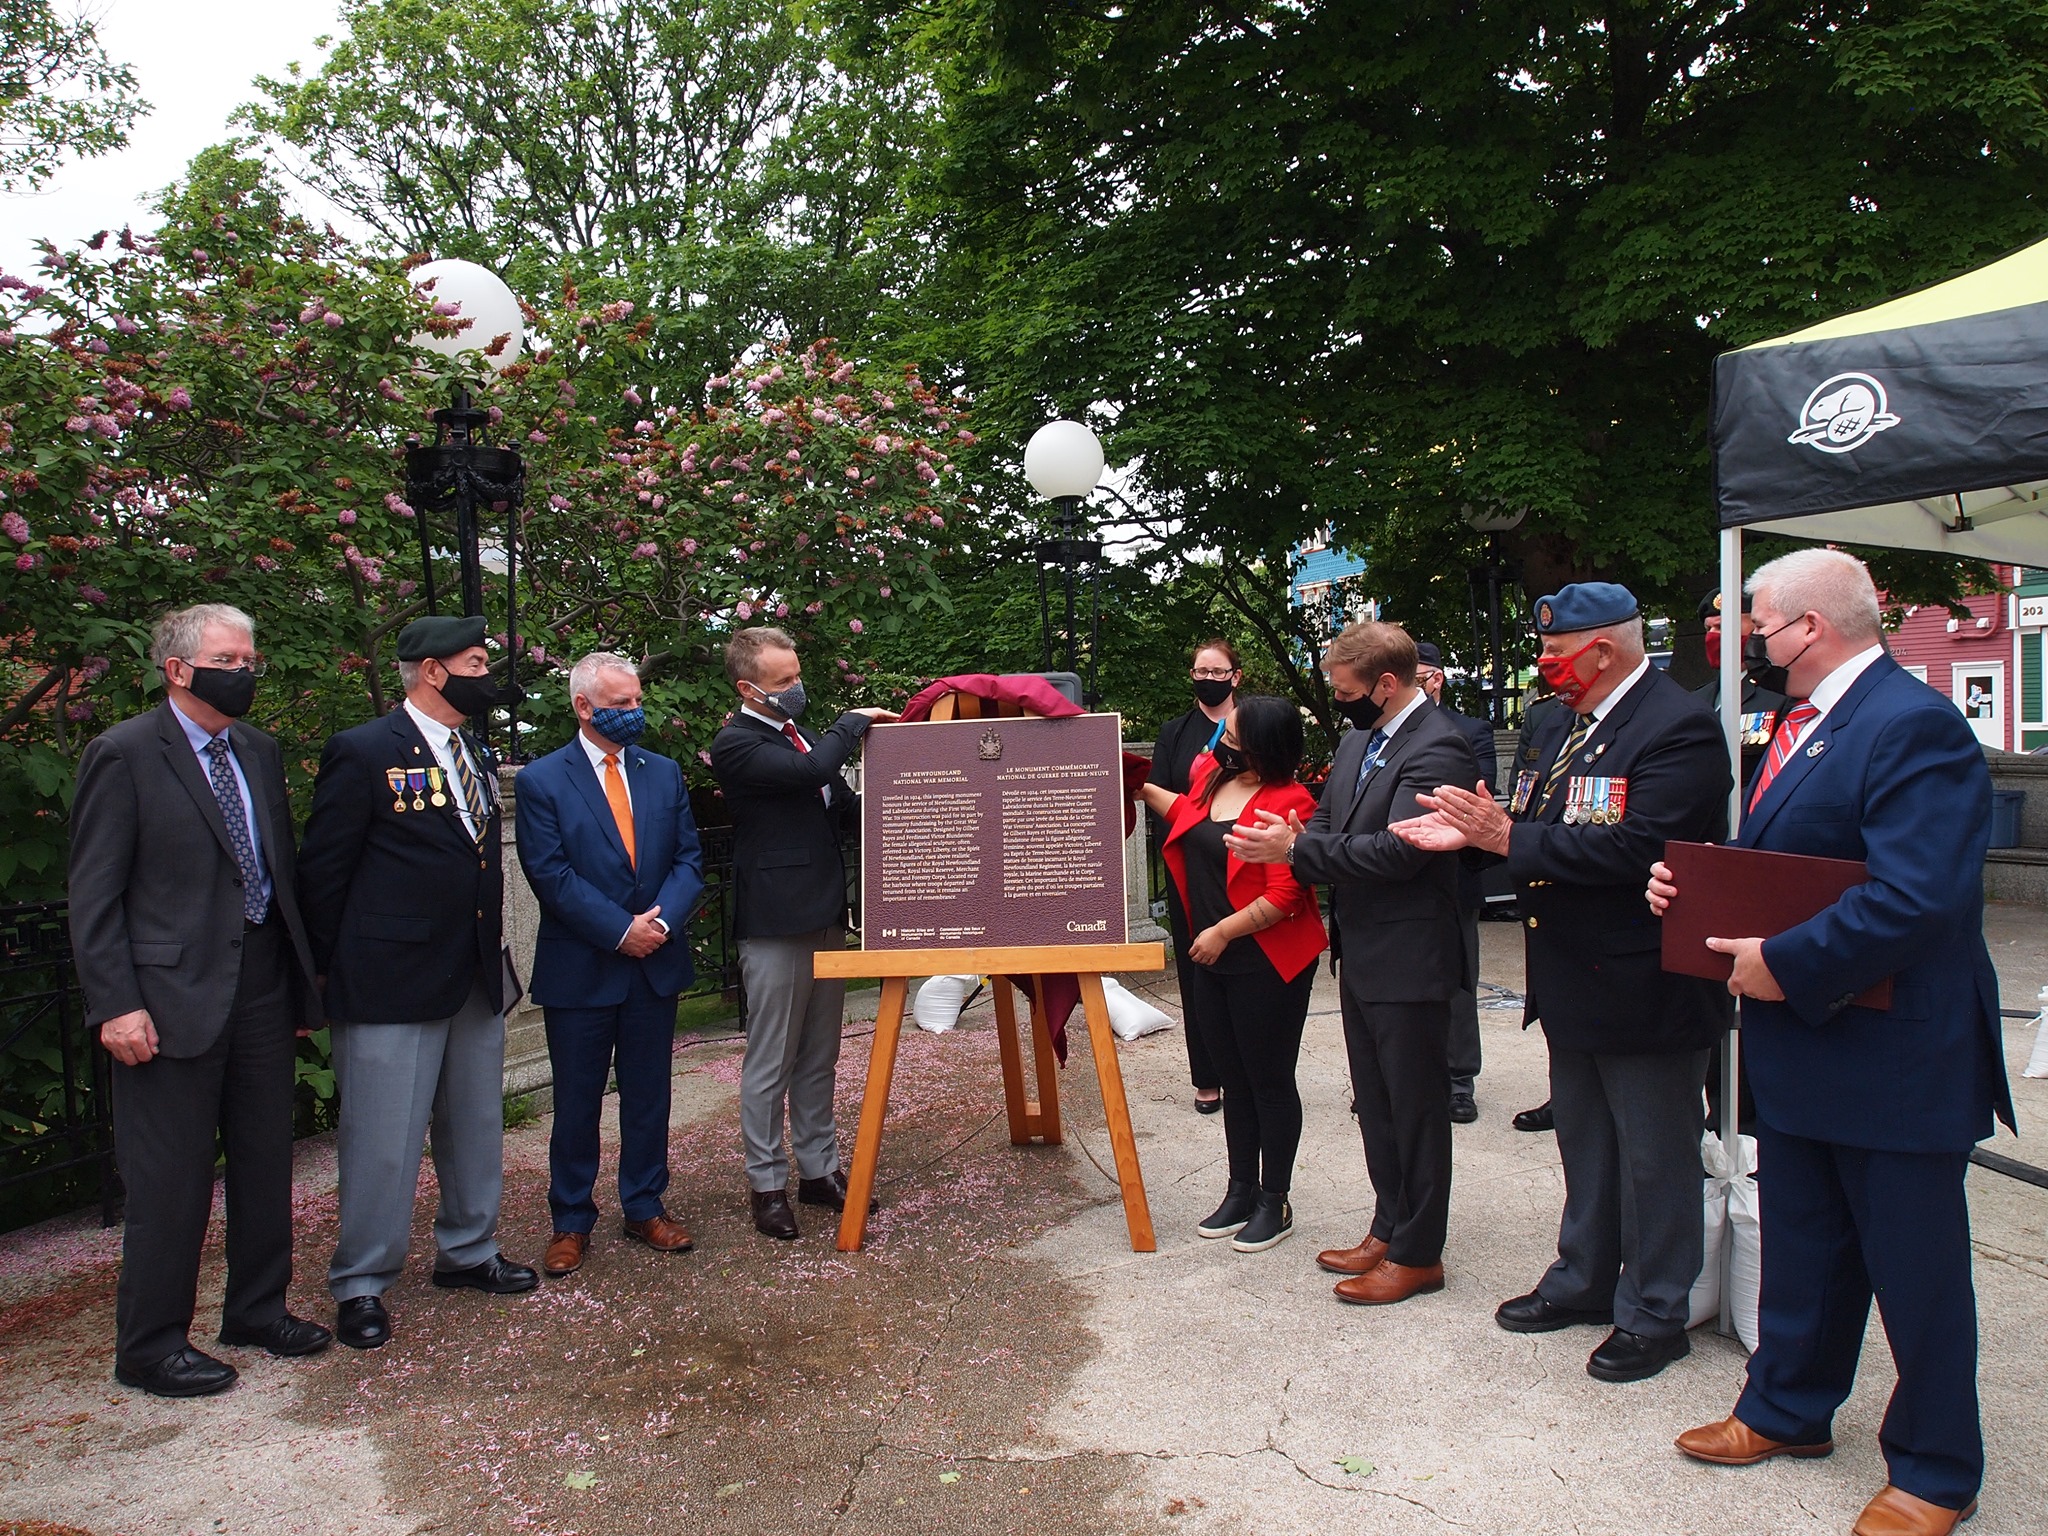 Commemorative plaque unveiling for Newfoundland National War Memorial National Historic Site